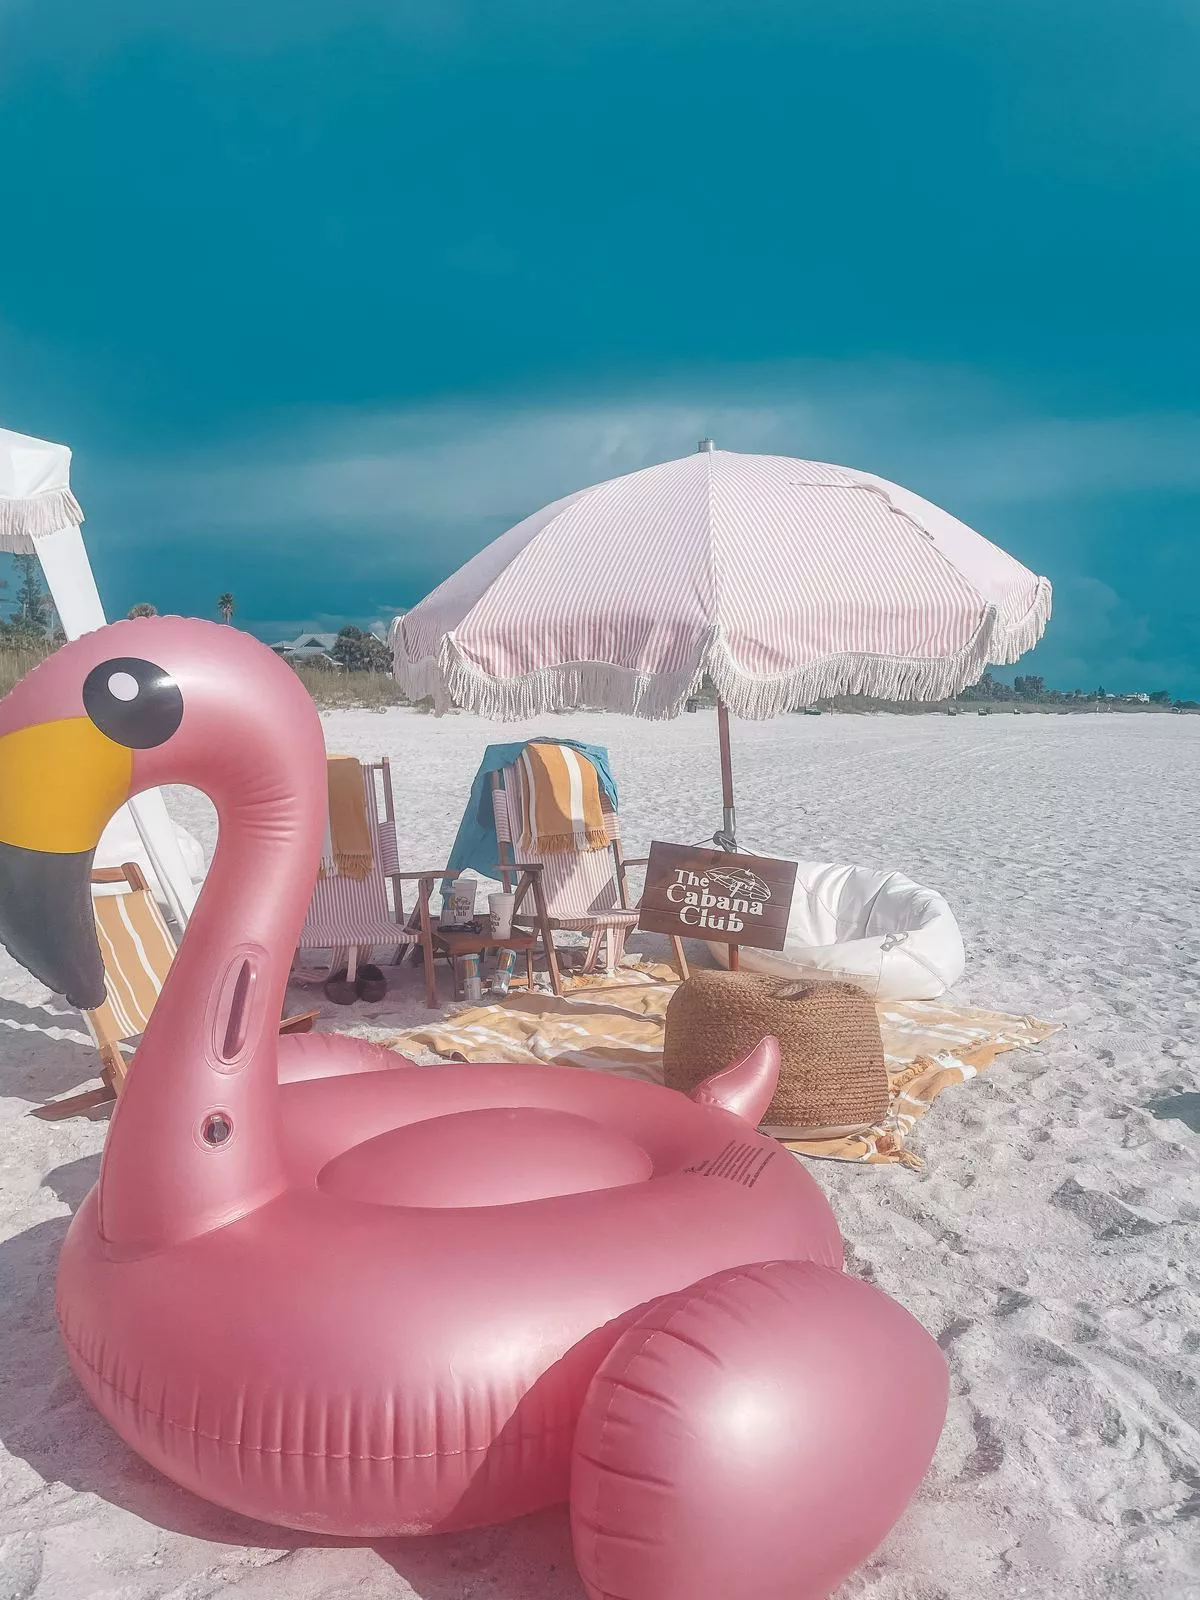 Flamingo float and Cabana Club setup on St. Pete Beach Florida